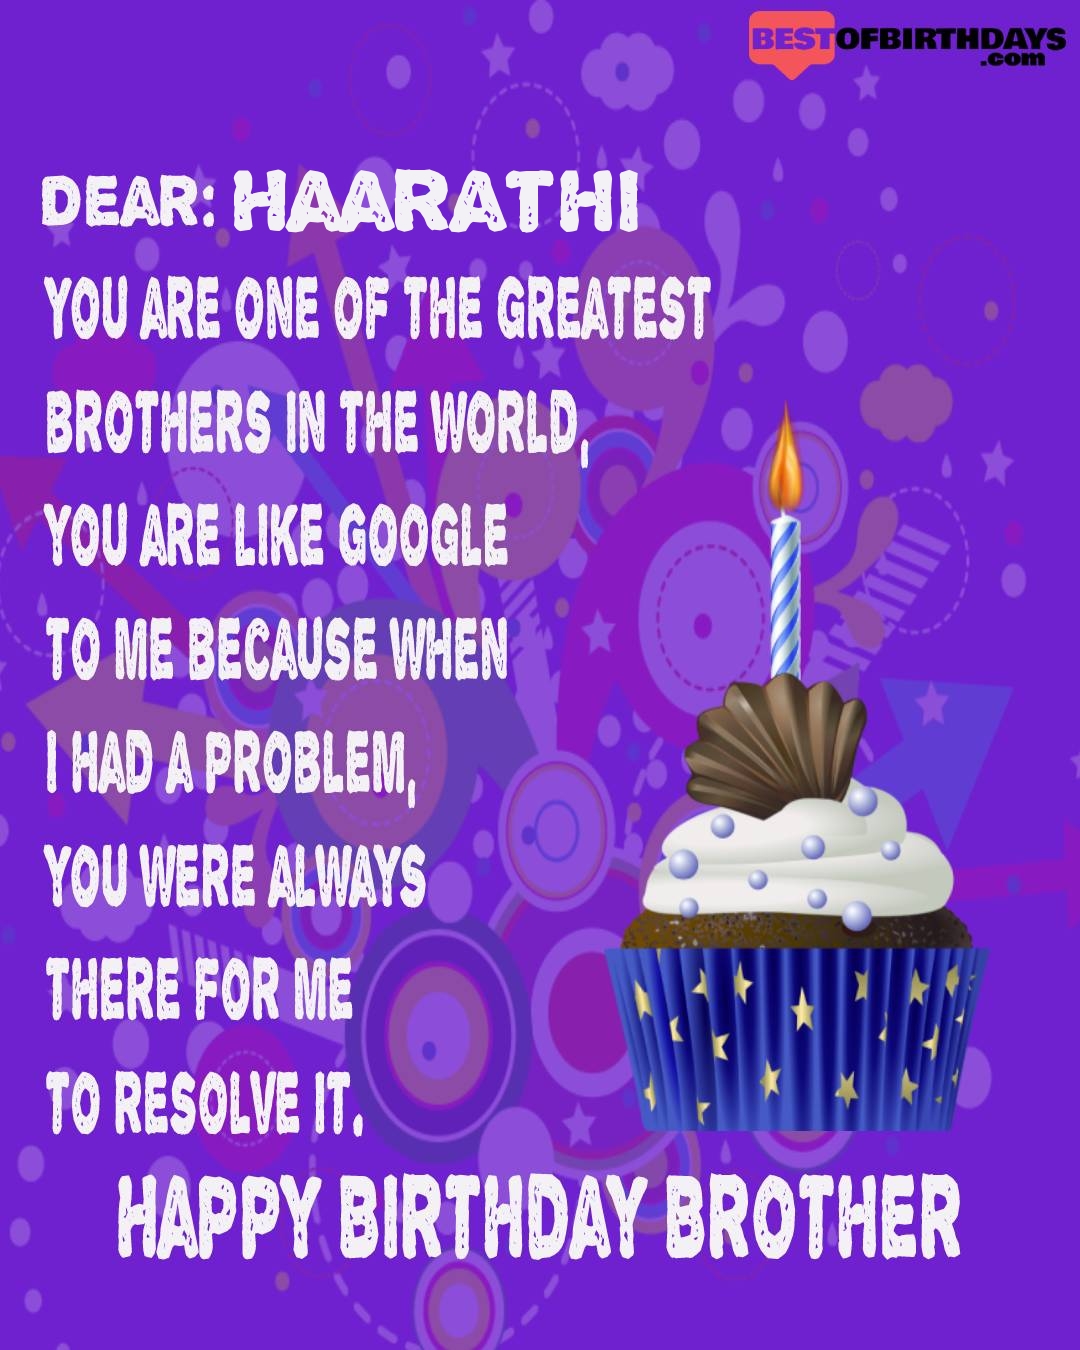 Happy birthday haarathi bhai brother bro